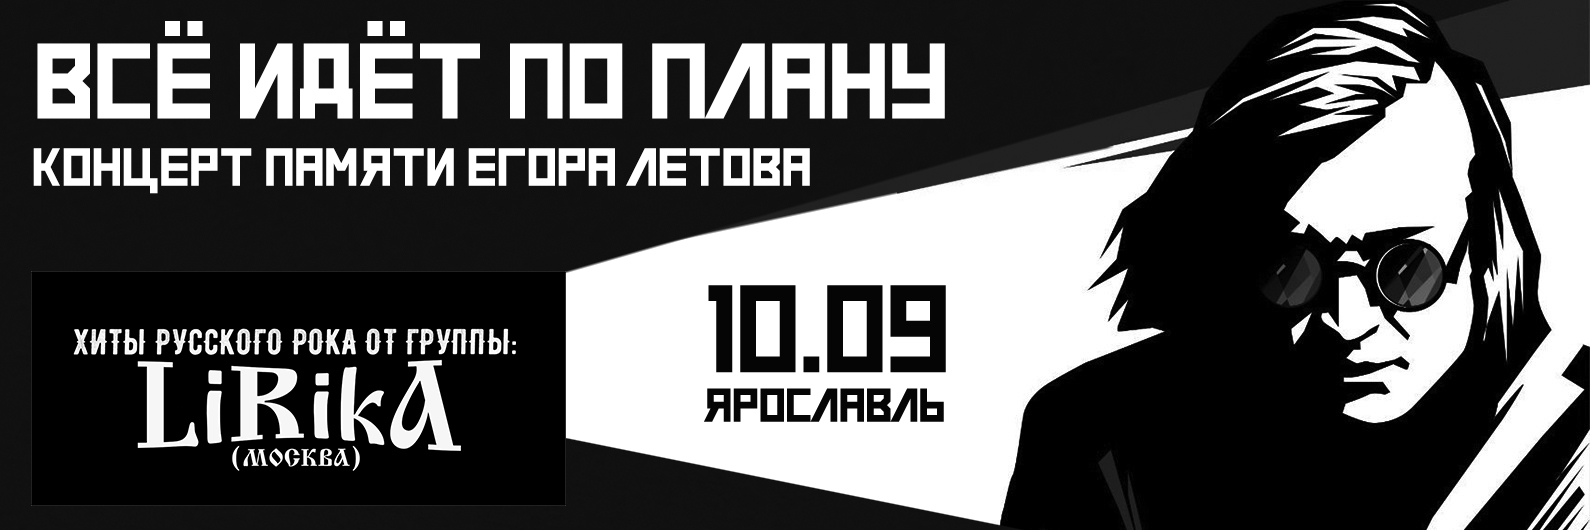 Концерт памяти Егора Летова | 10.09 | Ярославль